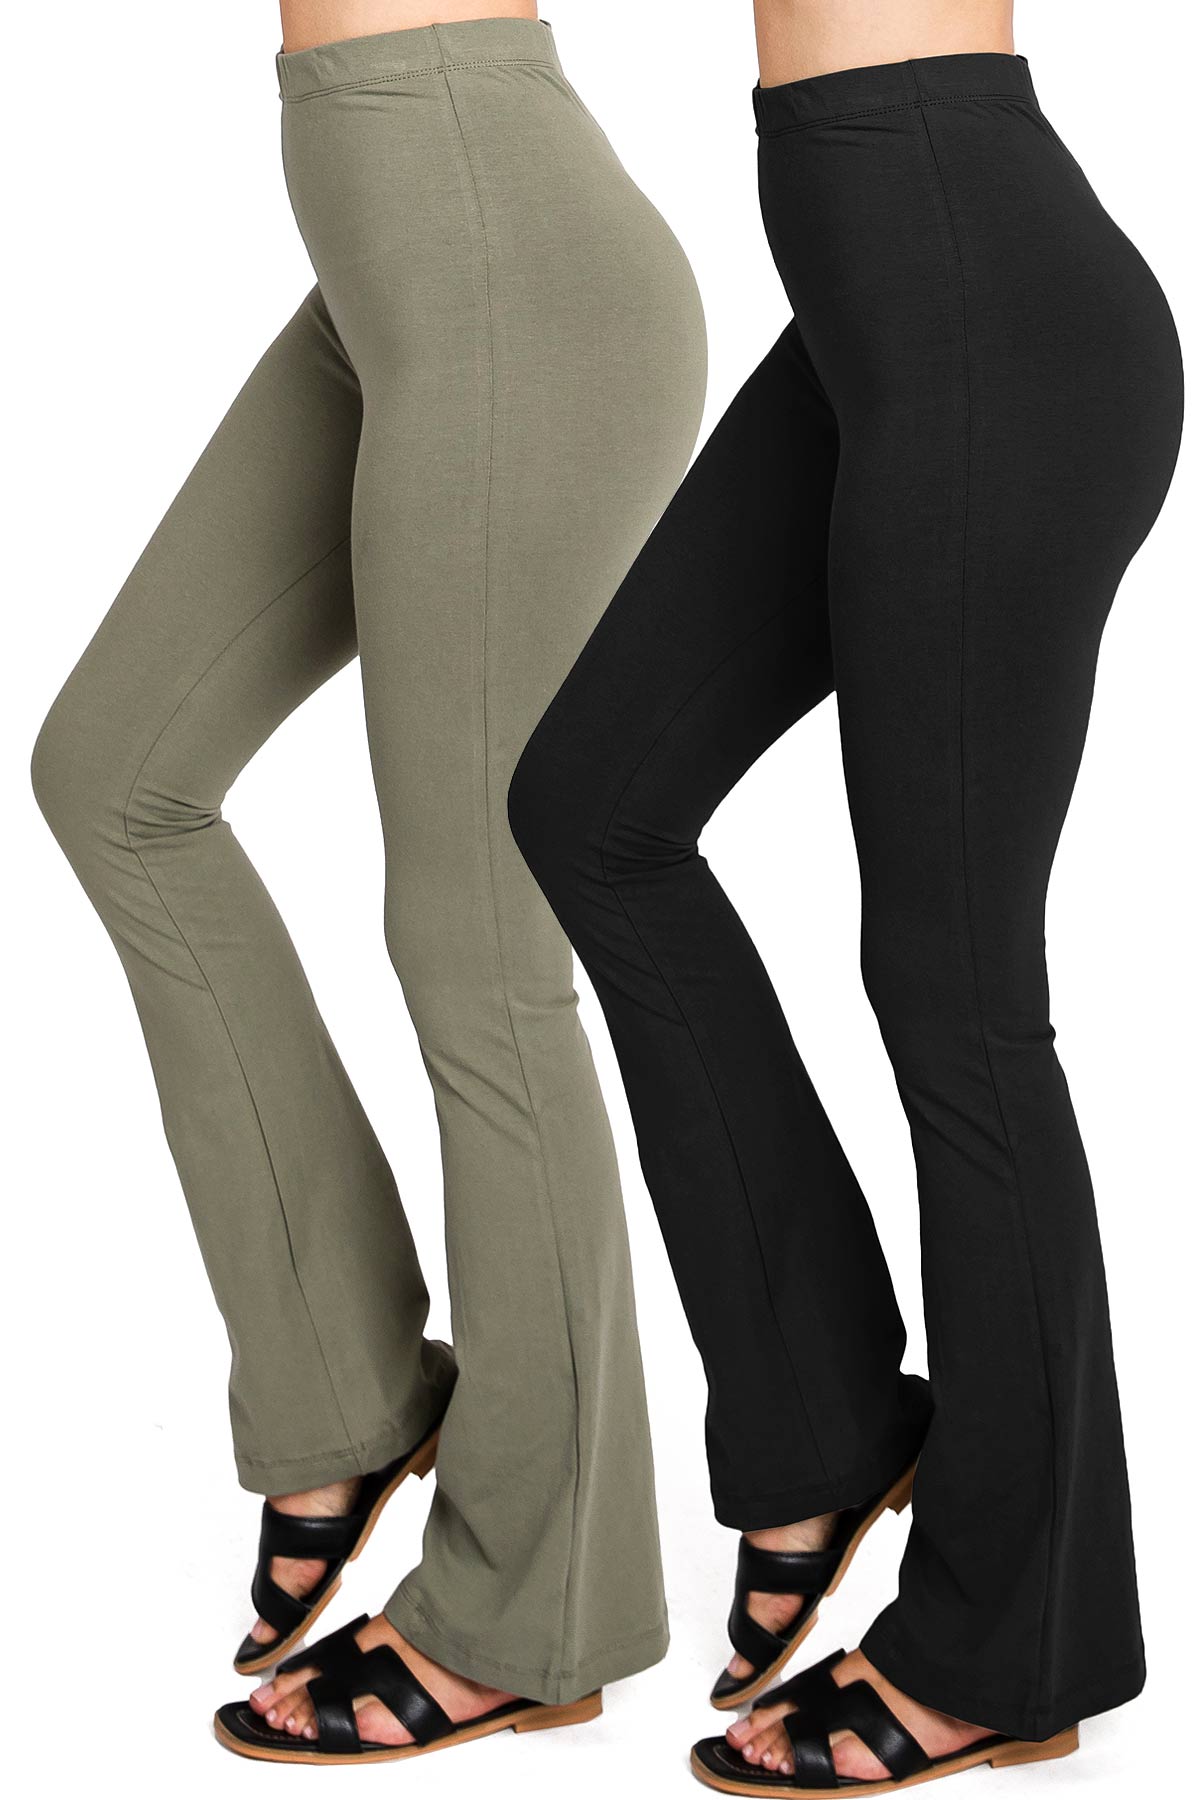 2 Item Bundle: Ambiance Apparel Women's Juniors Yoga Pants (M